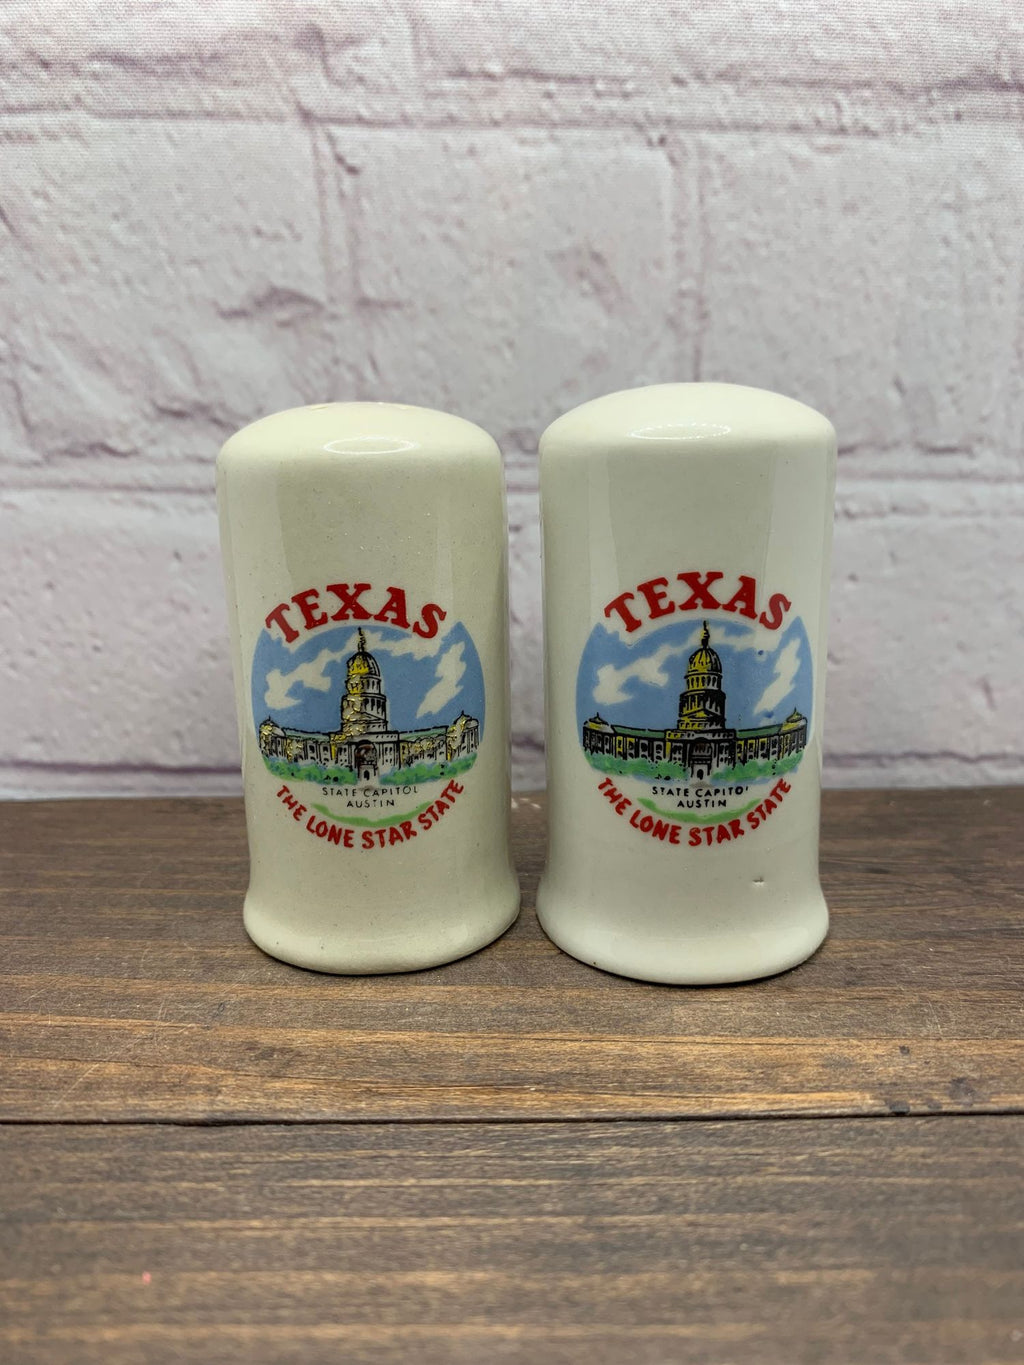 Vintage Texas Salt & Pepper Shakers, Lone Star State, Austin, Stare Capital, Japan 1050s